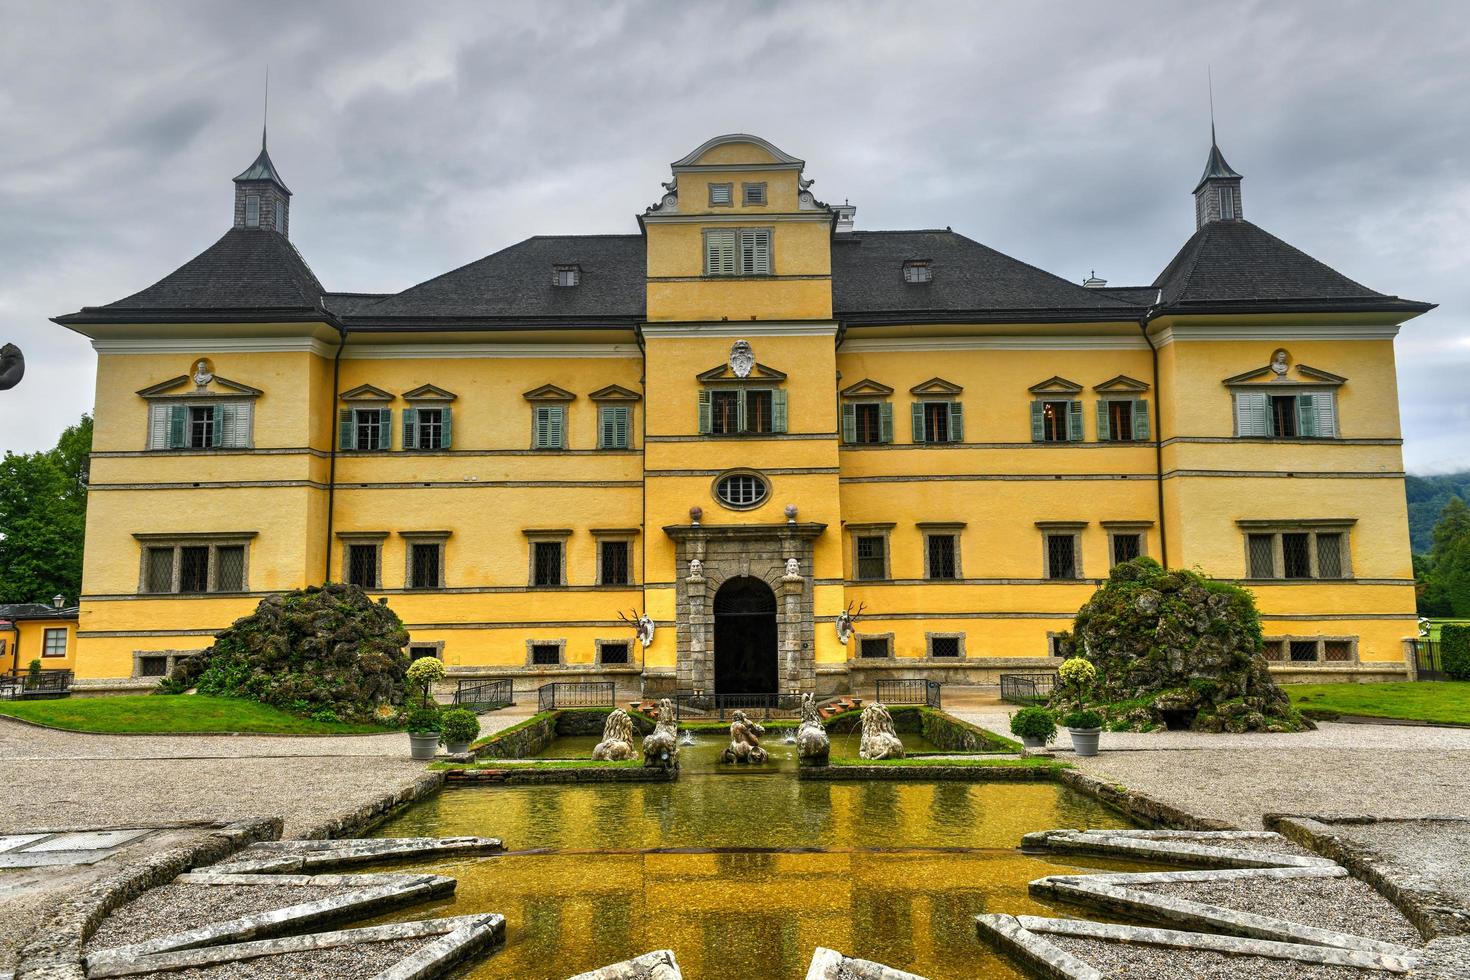 viena, Áustria - jul 11, 2021, infernobrunn Palácio, a cedo barroco villa do palaciano tamanho, perto morzg, uma sulista distrito do a cidade do salzburgo, Áustria. foto